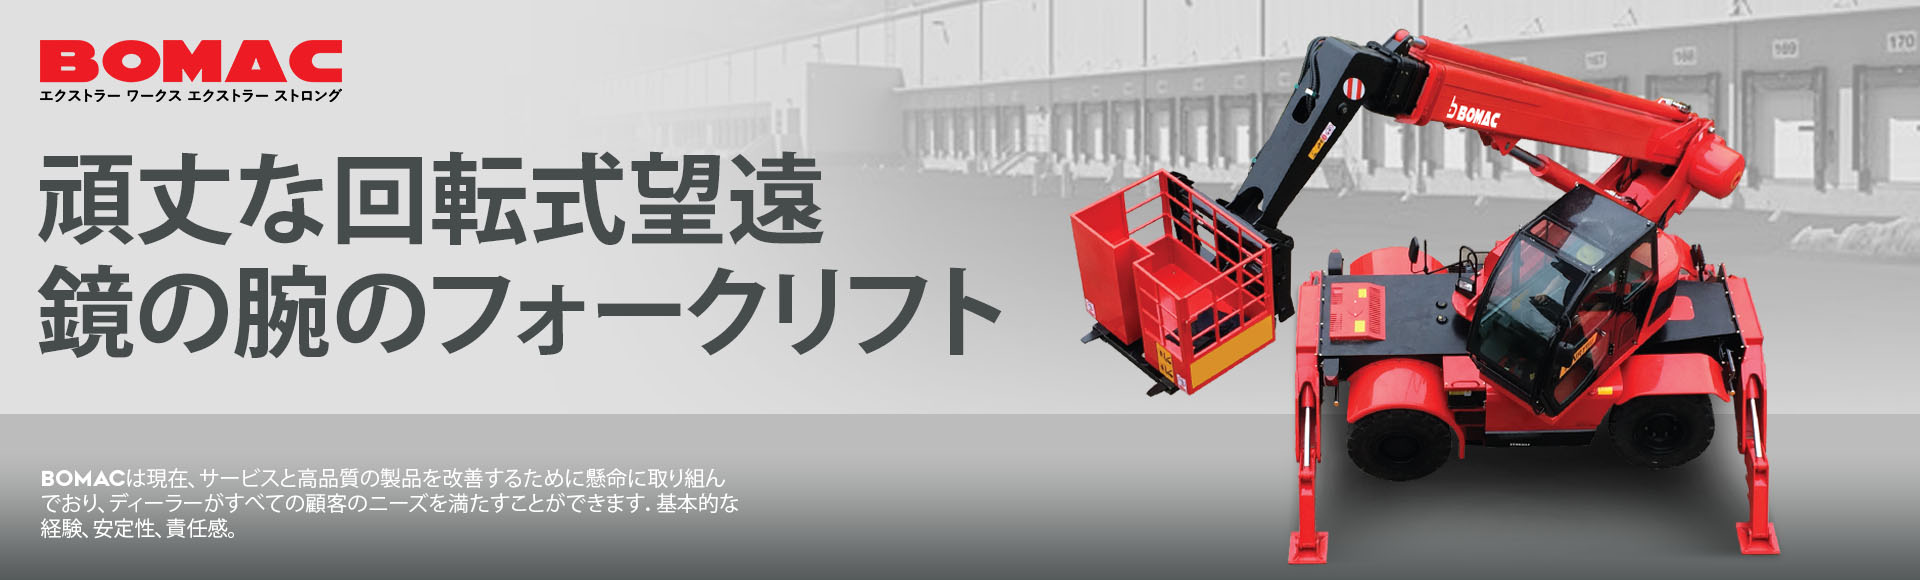 Bomac Rotary Telescopic Arm Forklift Japan Ver